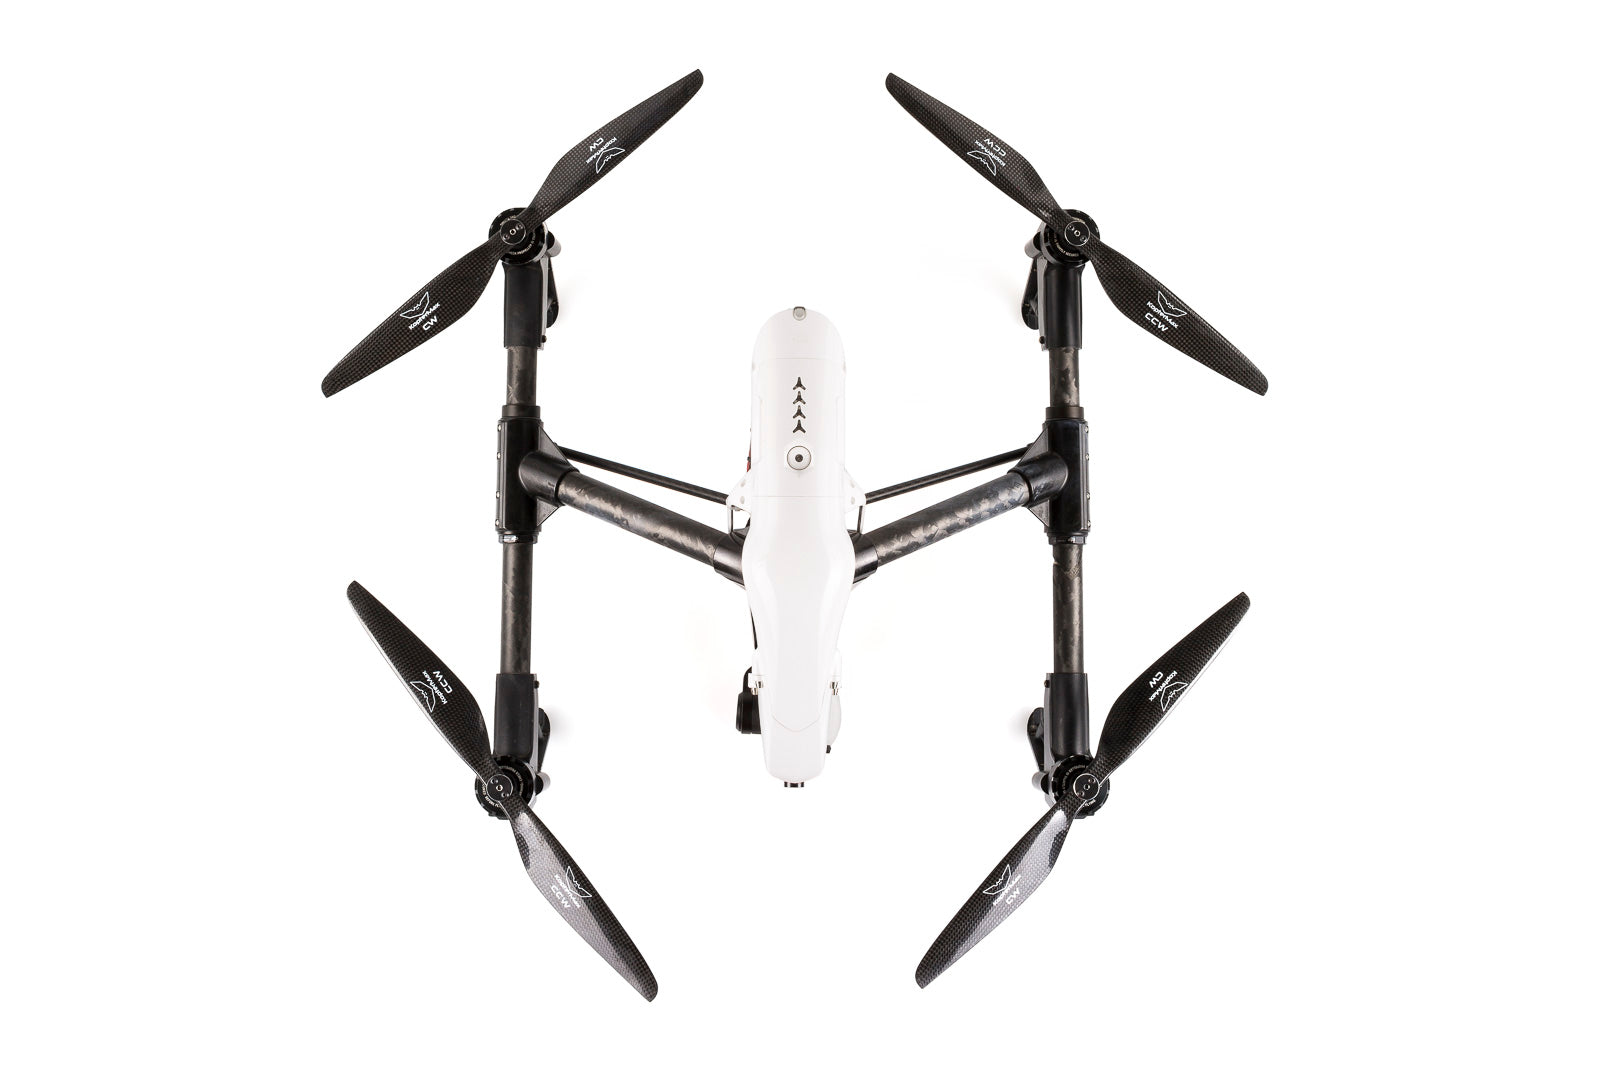 Carbon Fiber propeller adapters for DJI Inspire 1/Matrice 100 drone